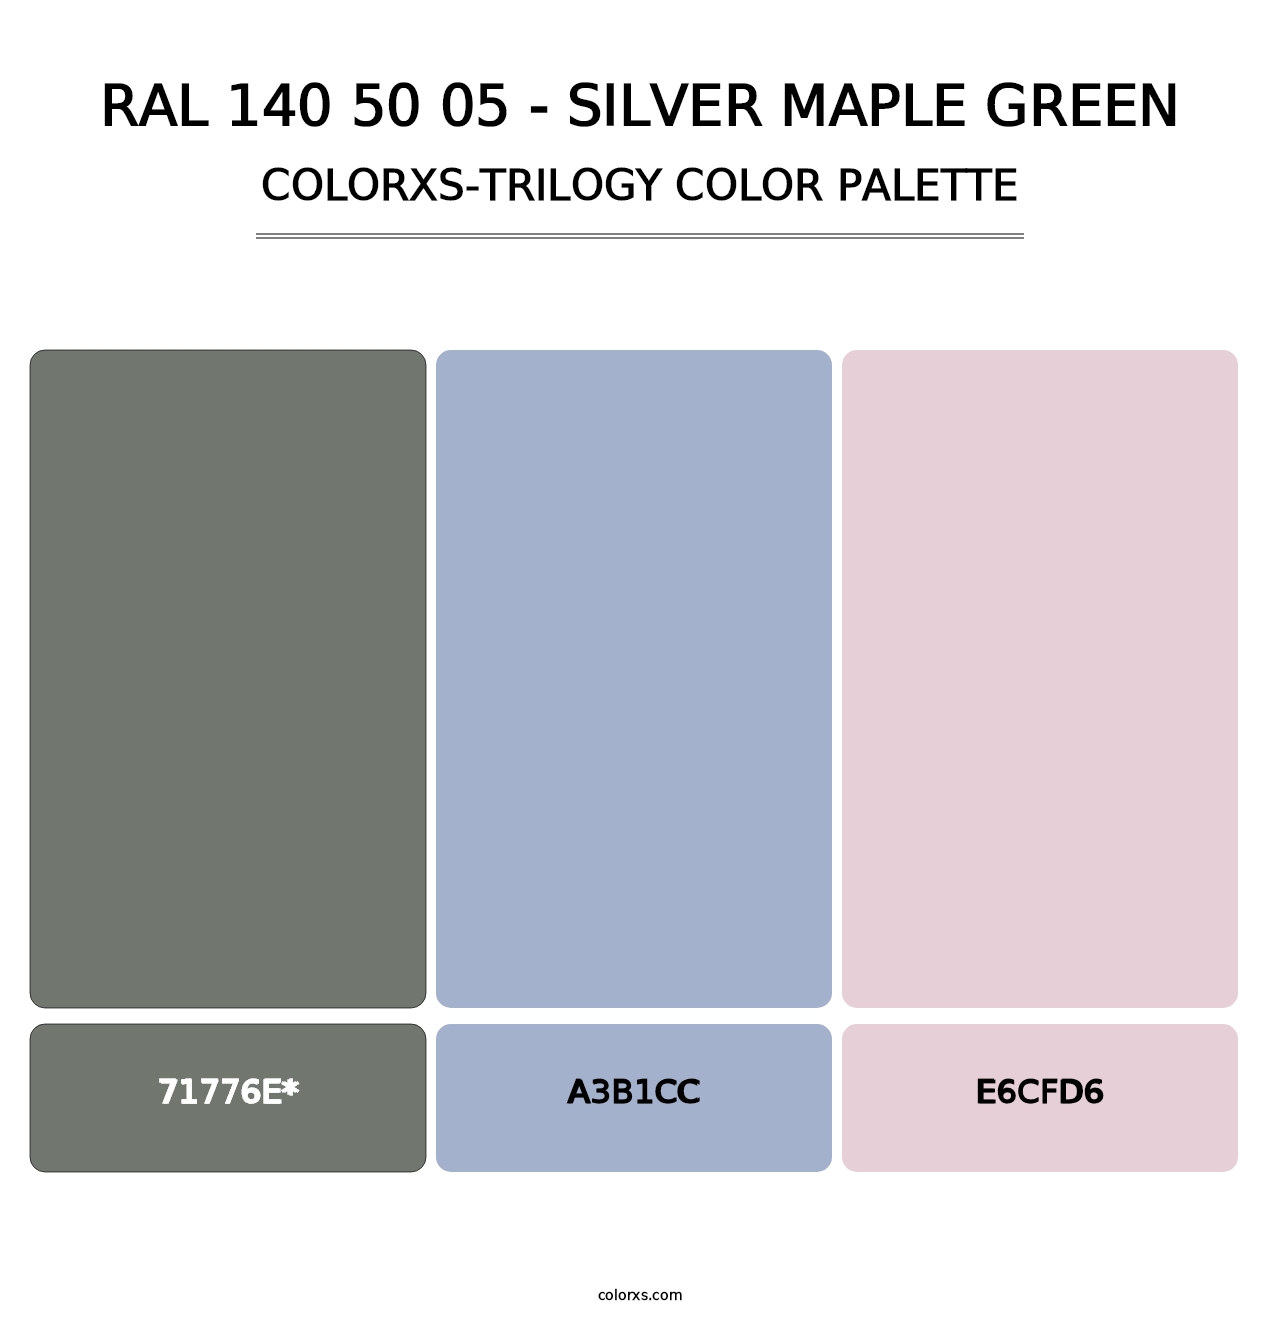 RAL 140 50 05 - Silver Maple Green - Colorxs Trilogy Palette